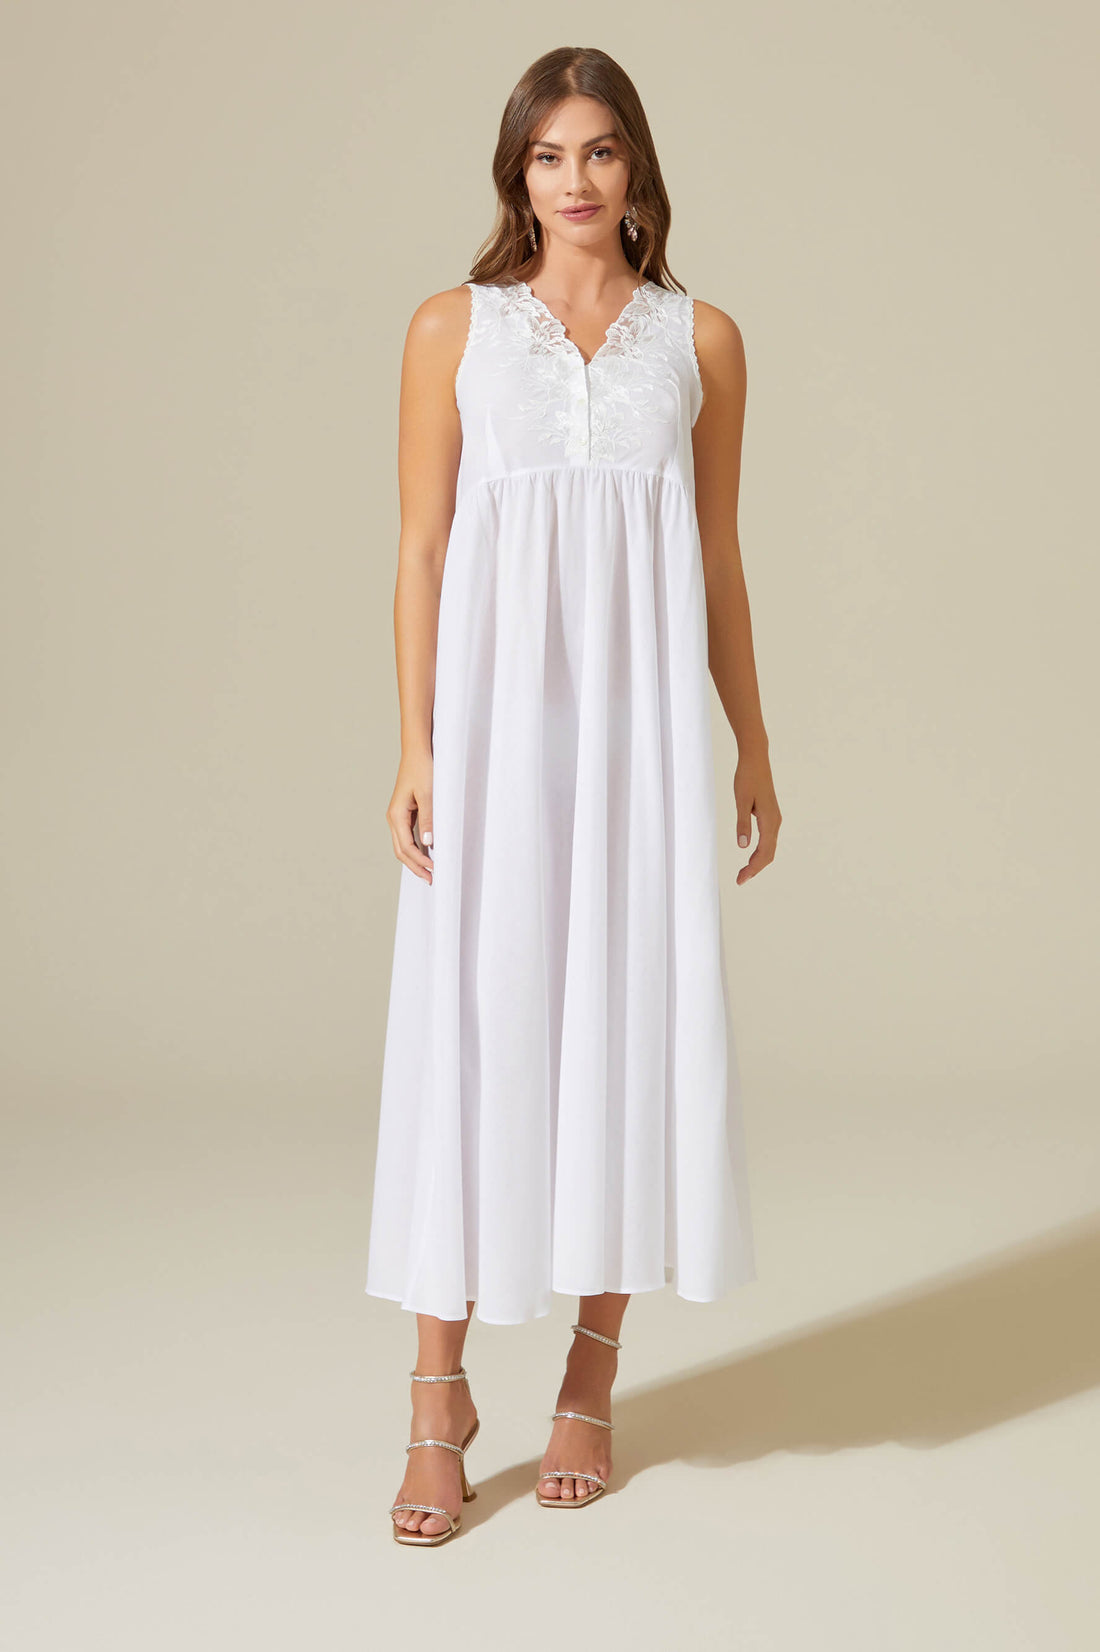 Luxury Cotton Nightdress, Pyjamas & Robes – Bocan